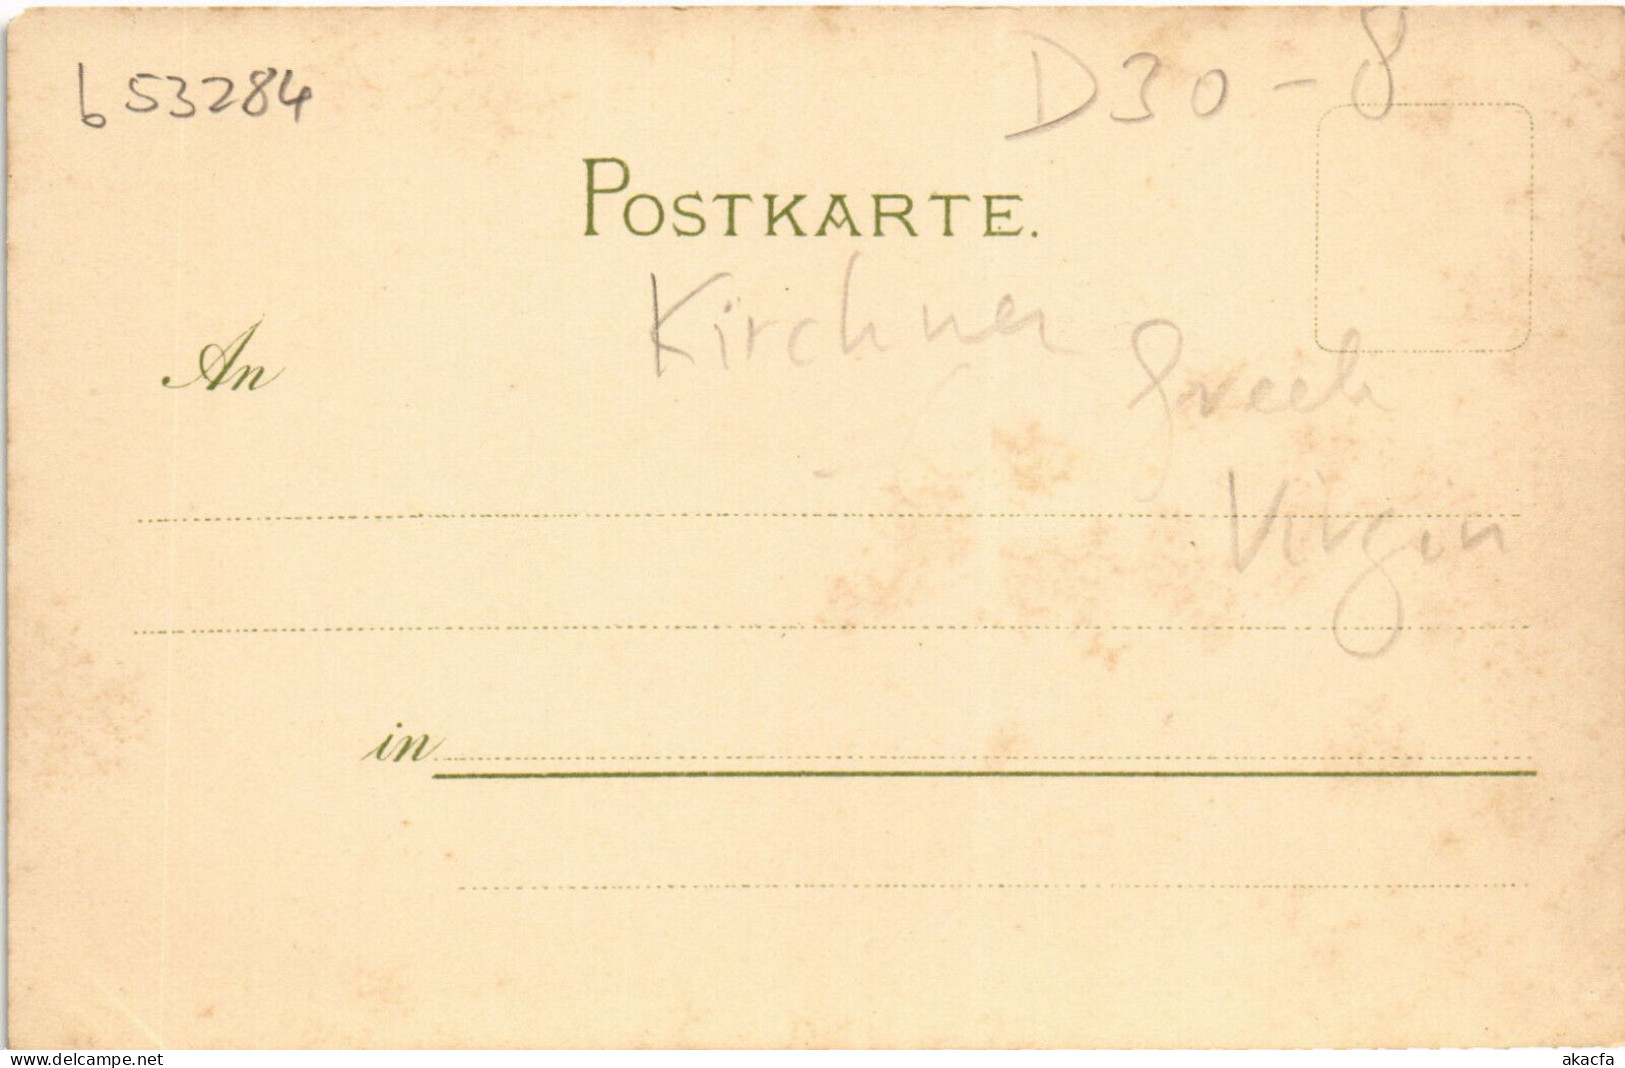 PC KIRCHNER, ART NOUVEAU, LADY ON THE SHORE, D30-8, Vintage Postcard (b53284) - Kirchner, Raphael